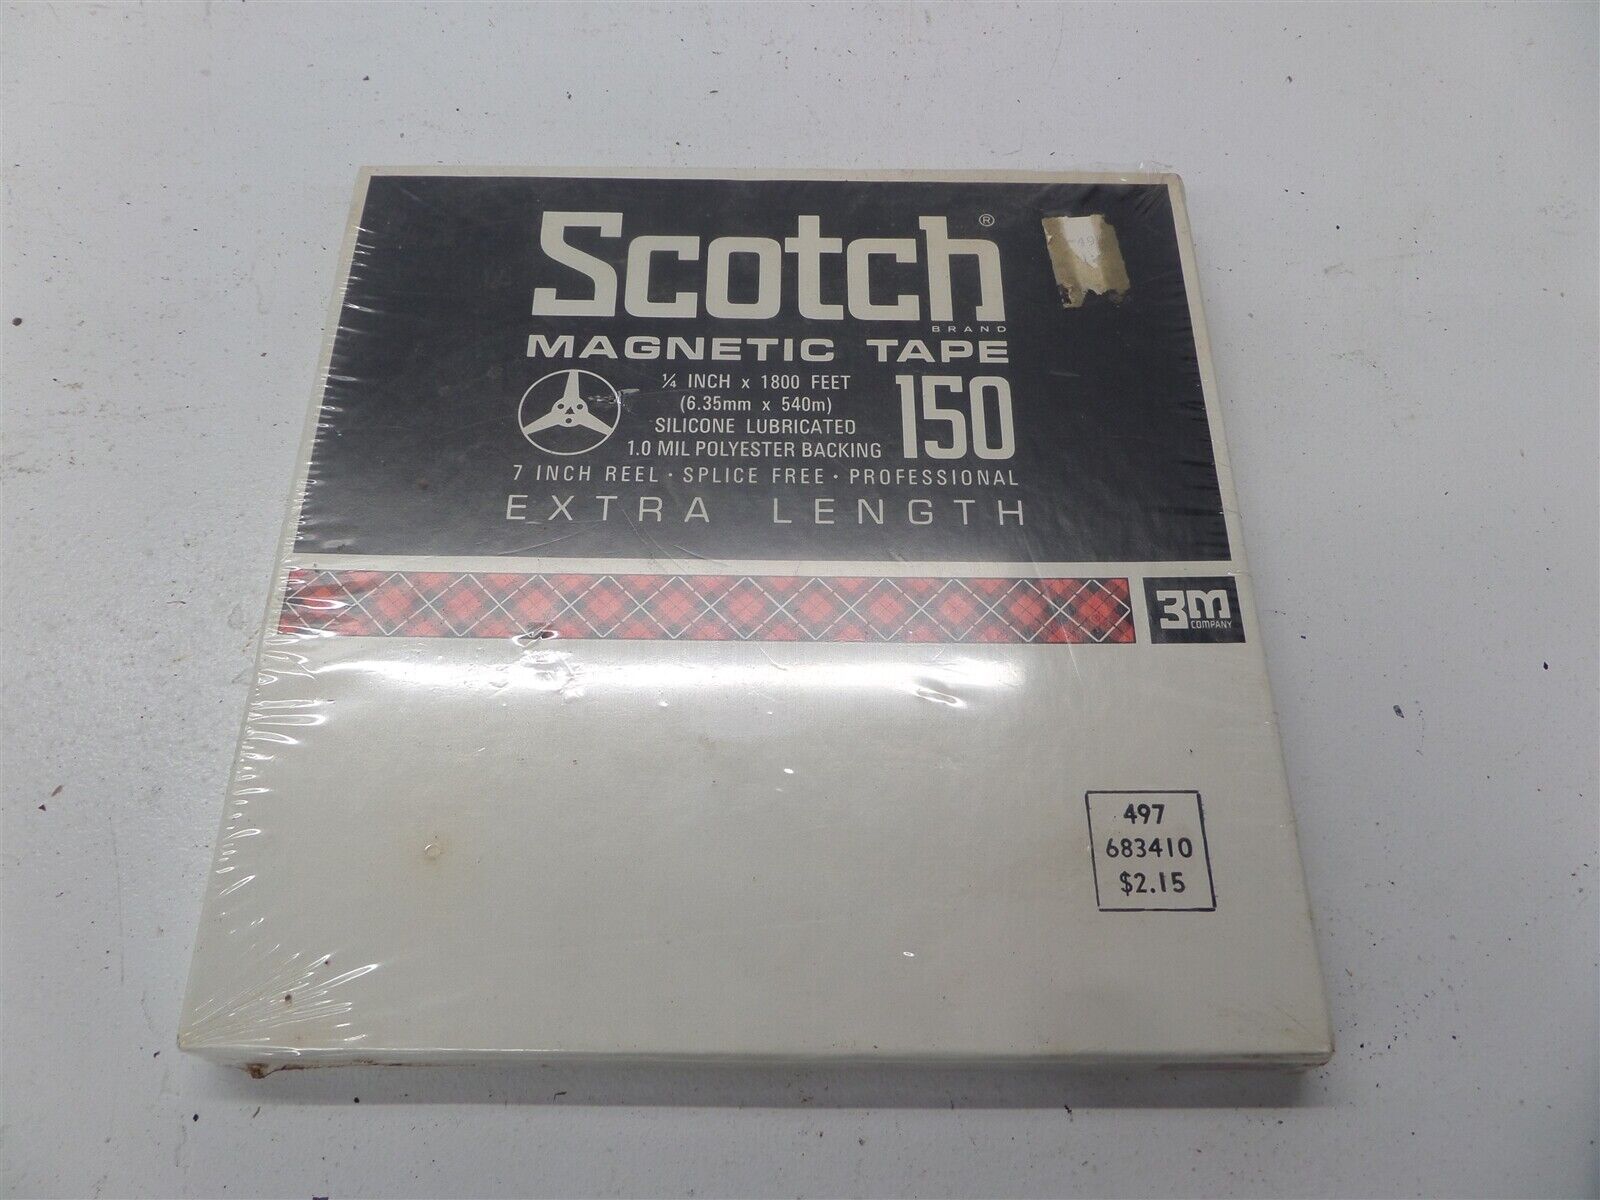 Vintage Scotch 3M Magnetic Tape 150 1/4